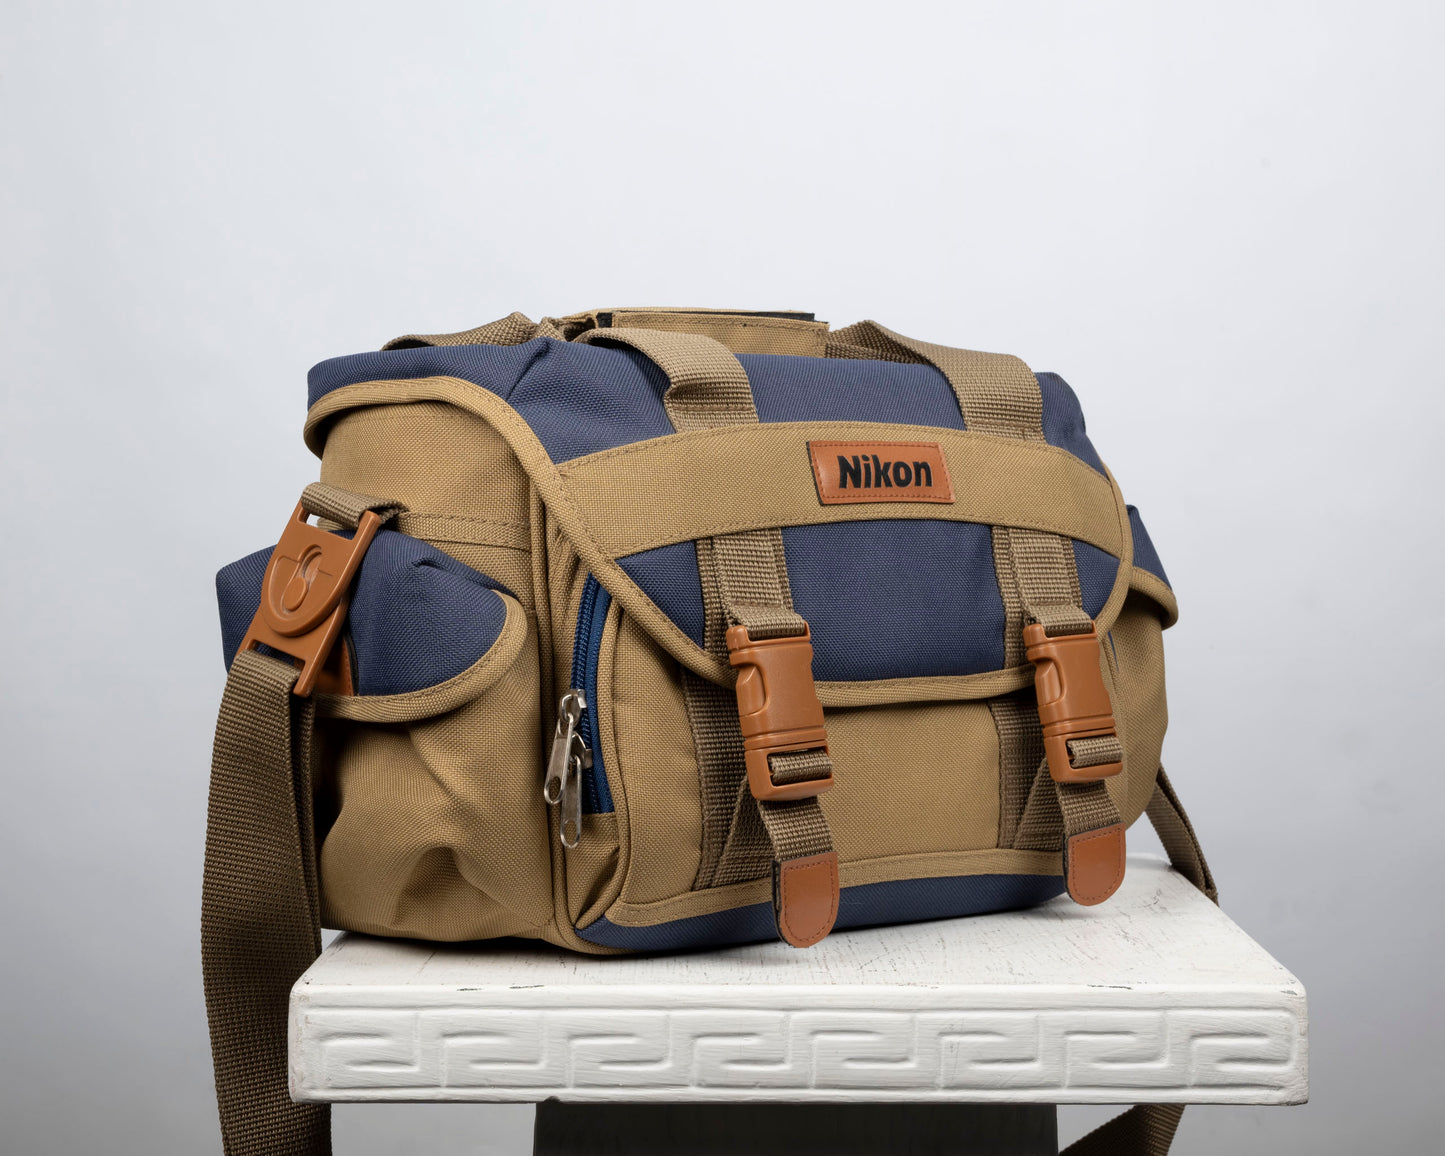 Nikon mid-sized tan and blue camera bag